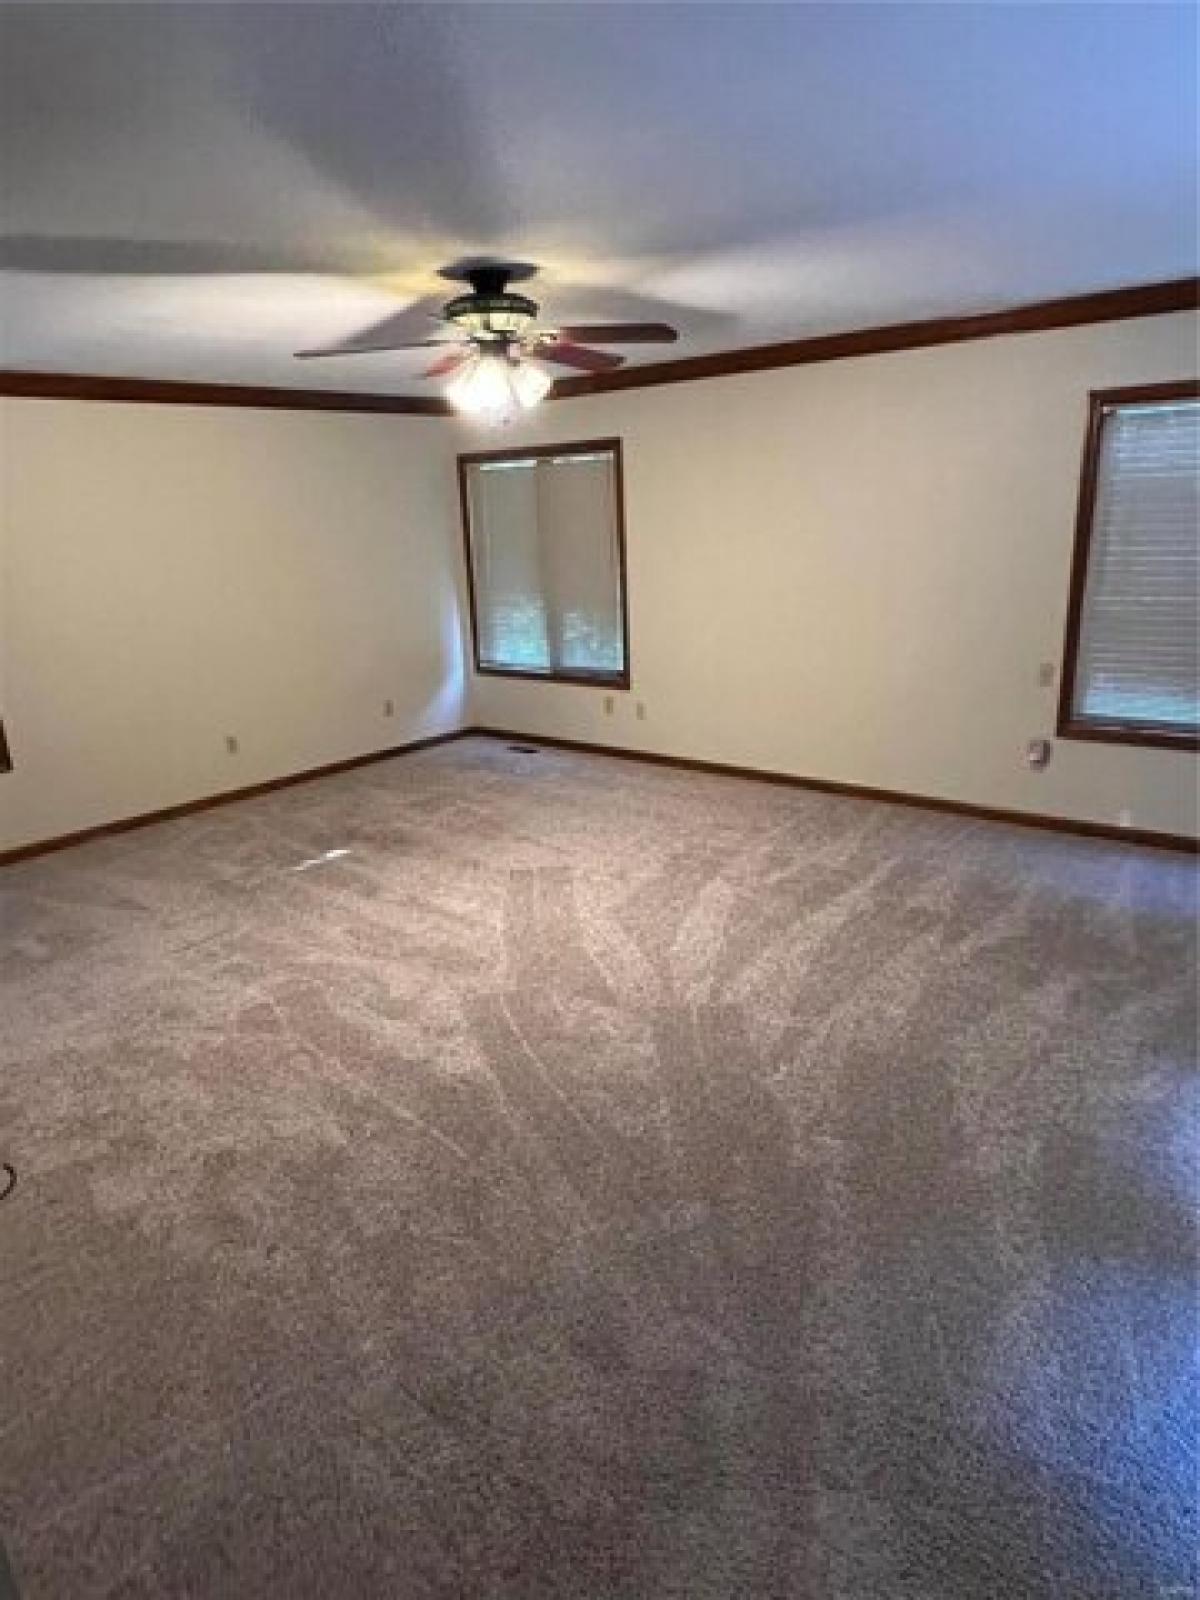 Picture of Home For Sale in Glencoe, Missouri, United States